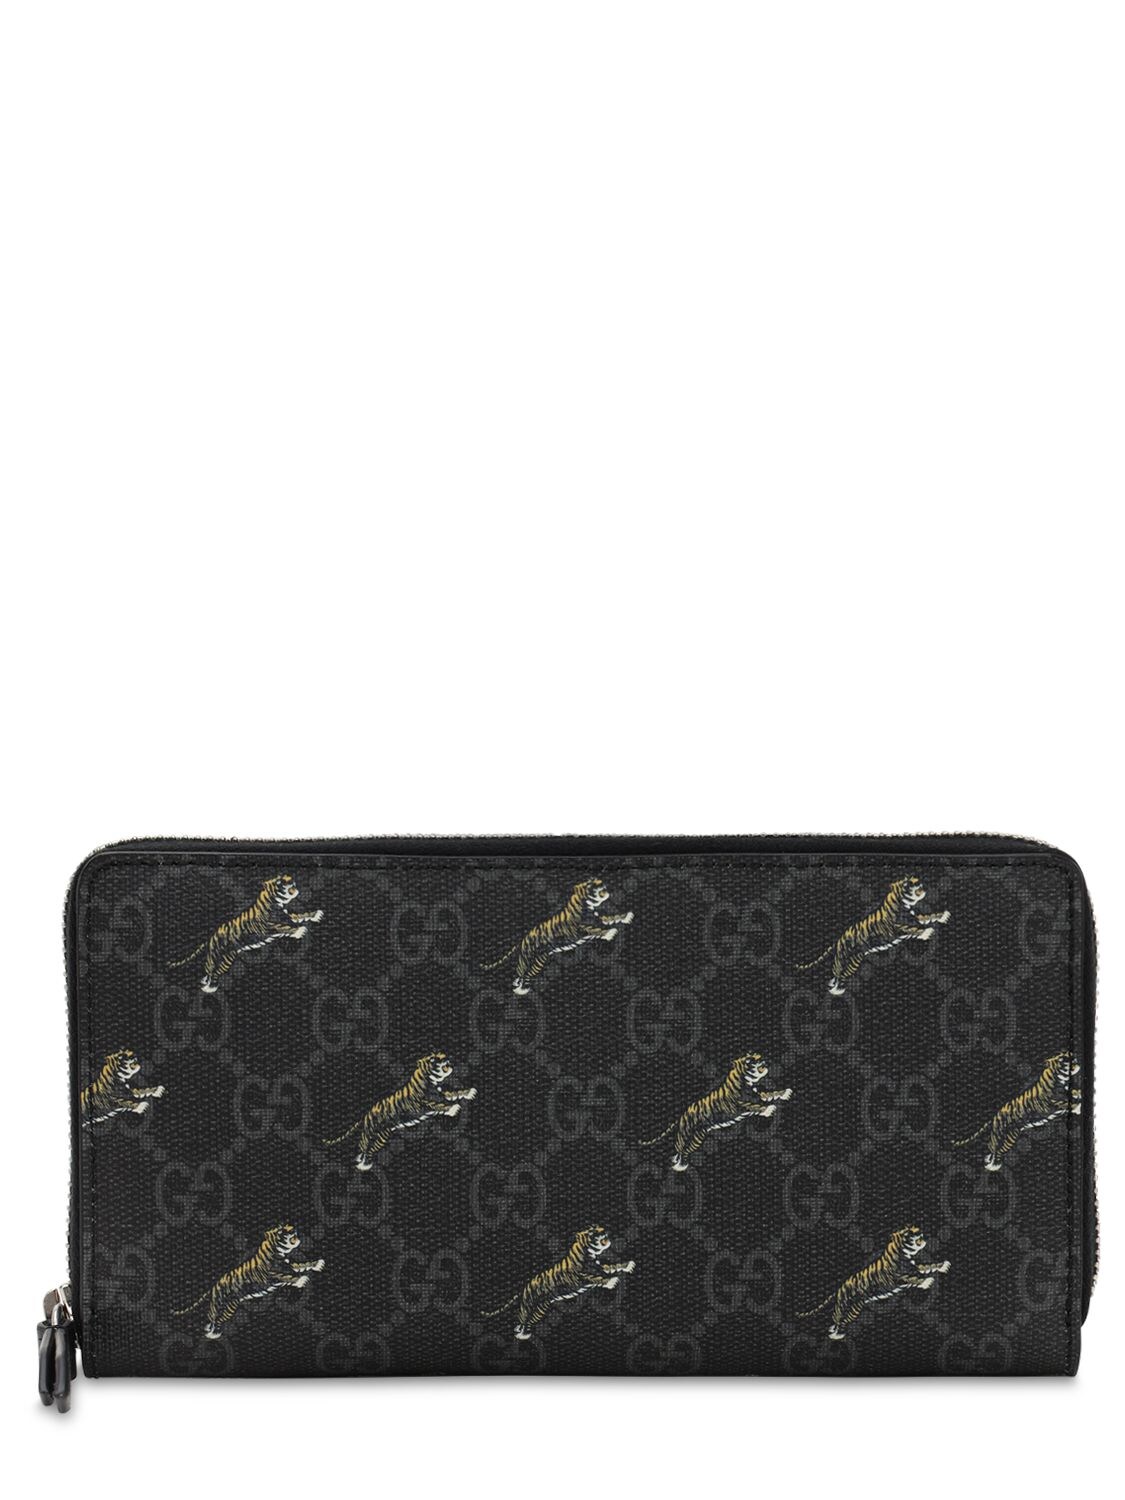 Gucci Gg Tig Zip Around Coated Canvas Wallet In Black